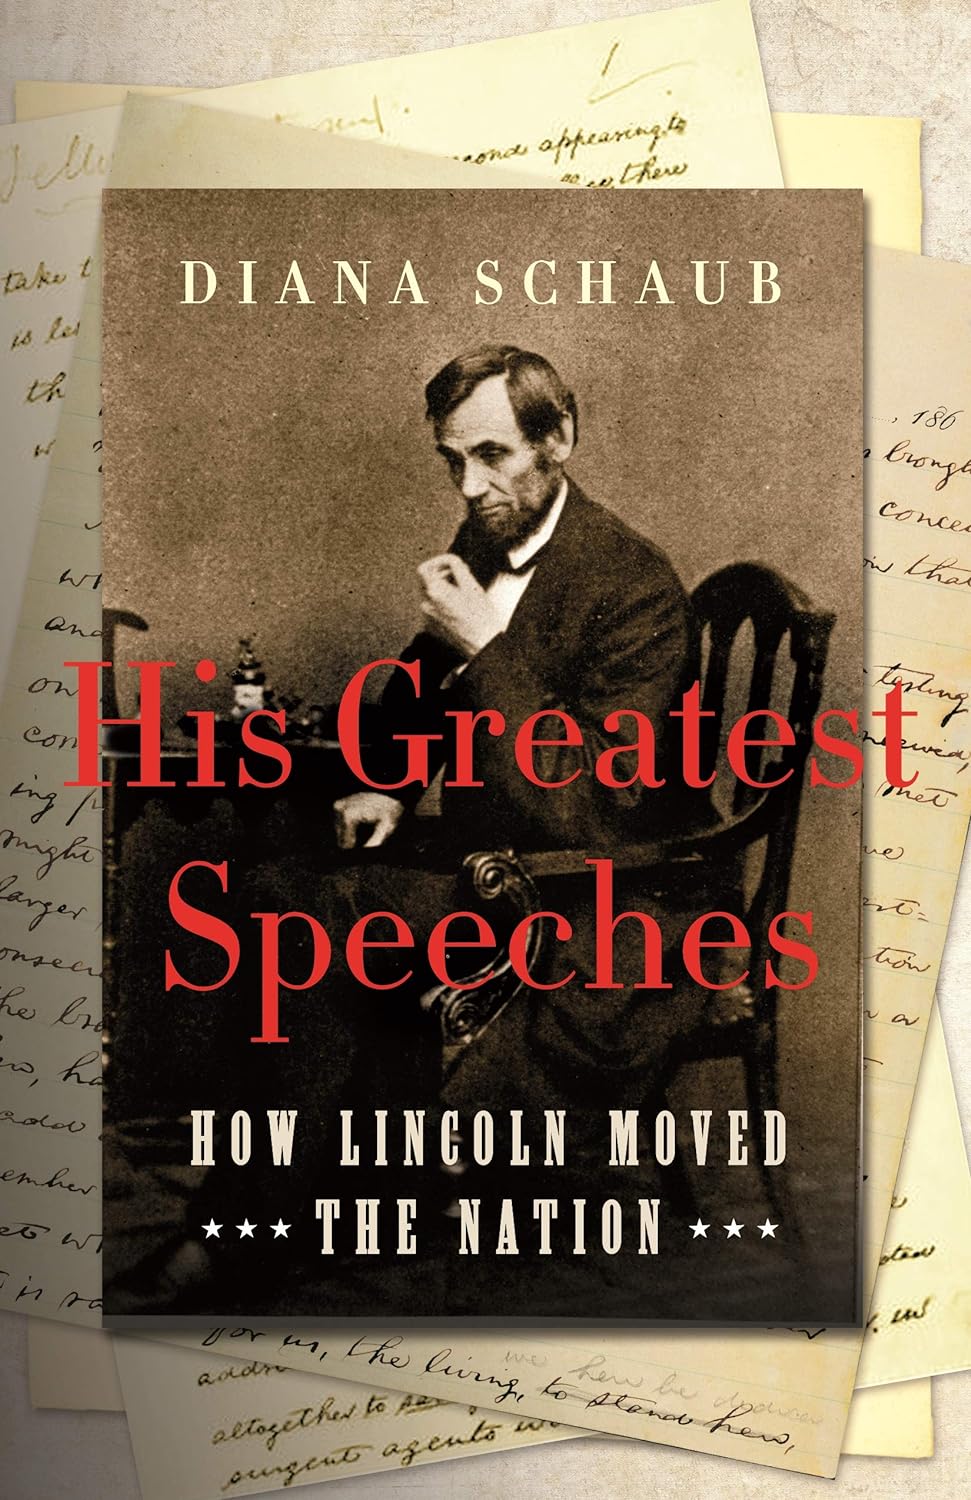 Diana Schaub, His Greatest Speeches book cover